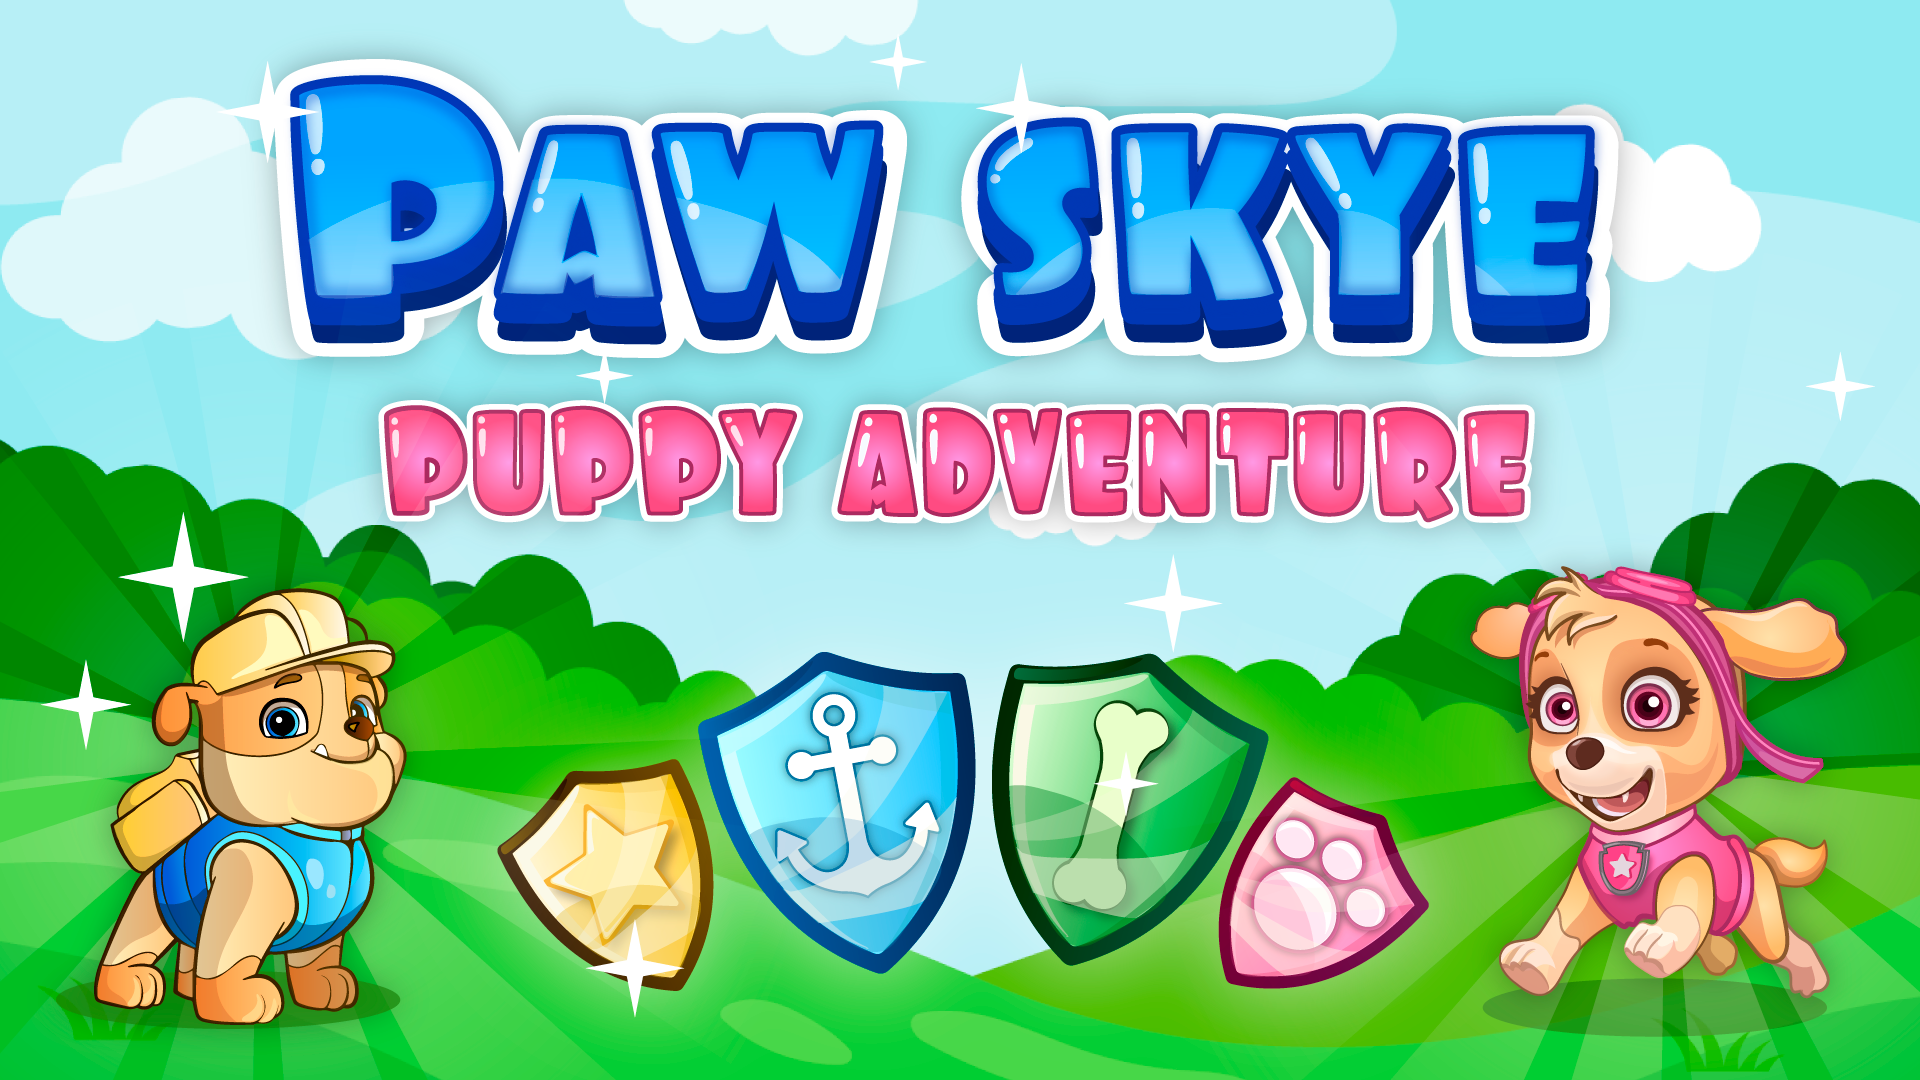 Screenshot of Paw skye puppy adventure